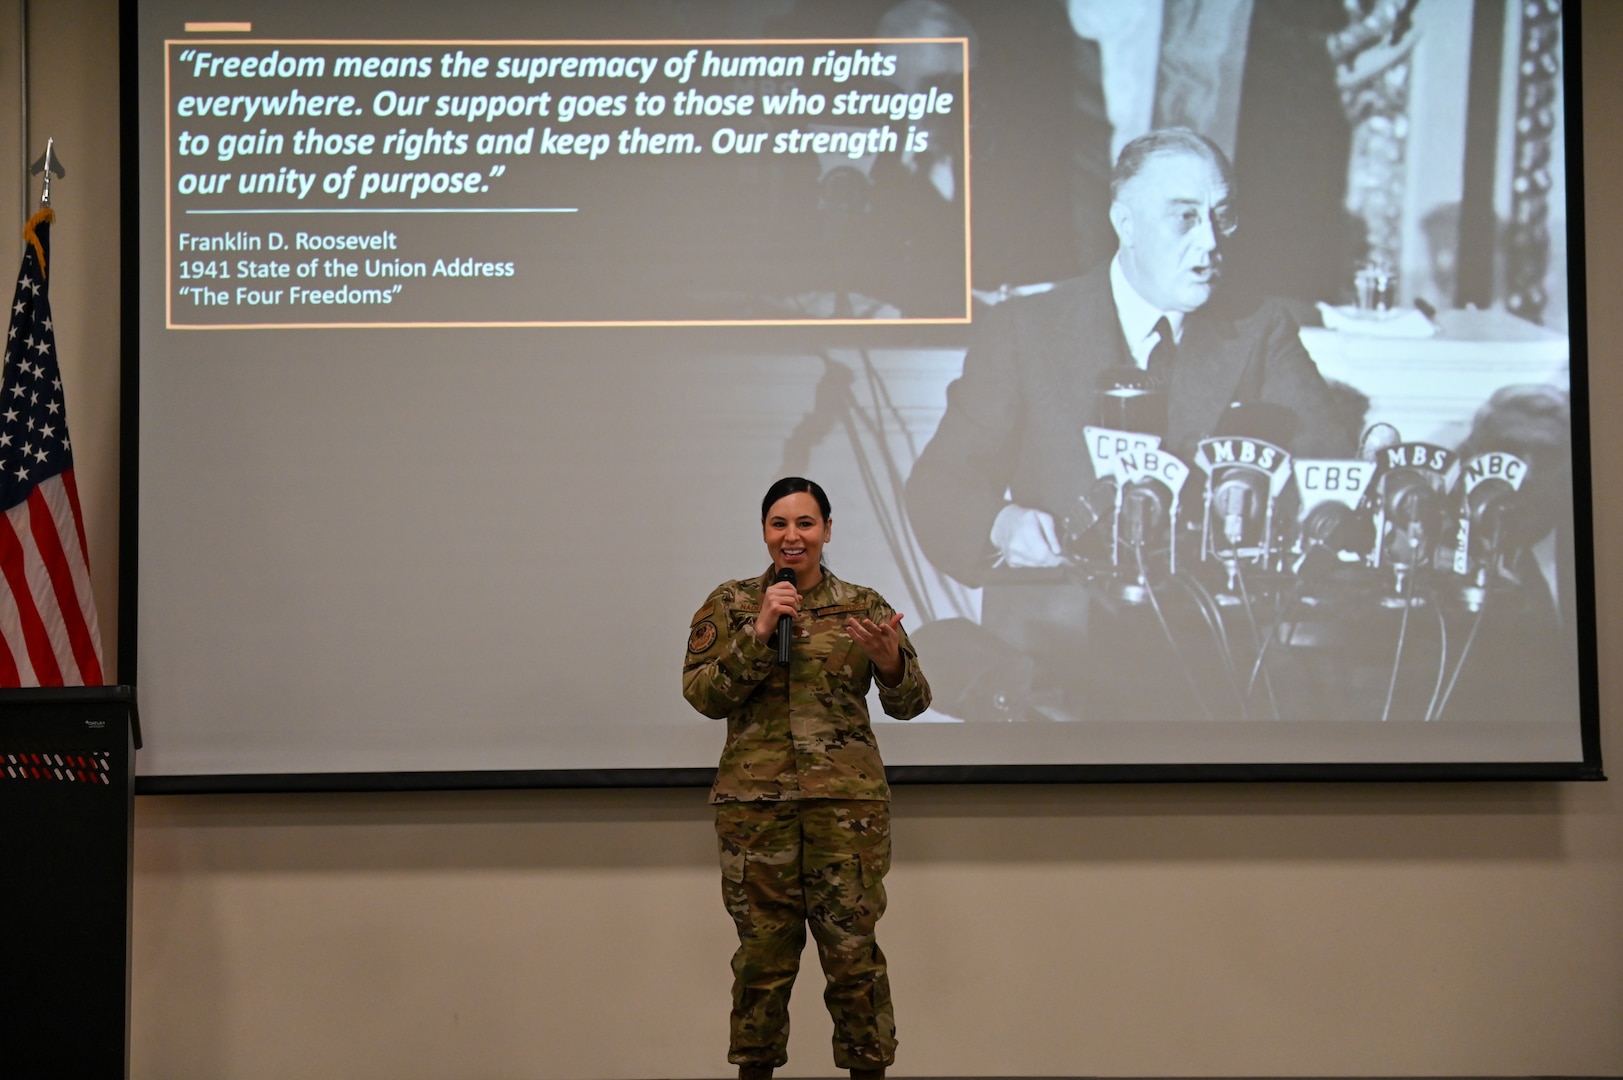 A U.S. Air Force Maj. gives a presentation.